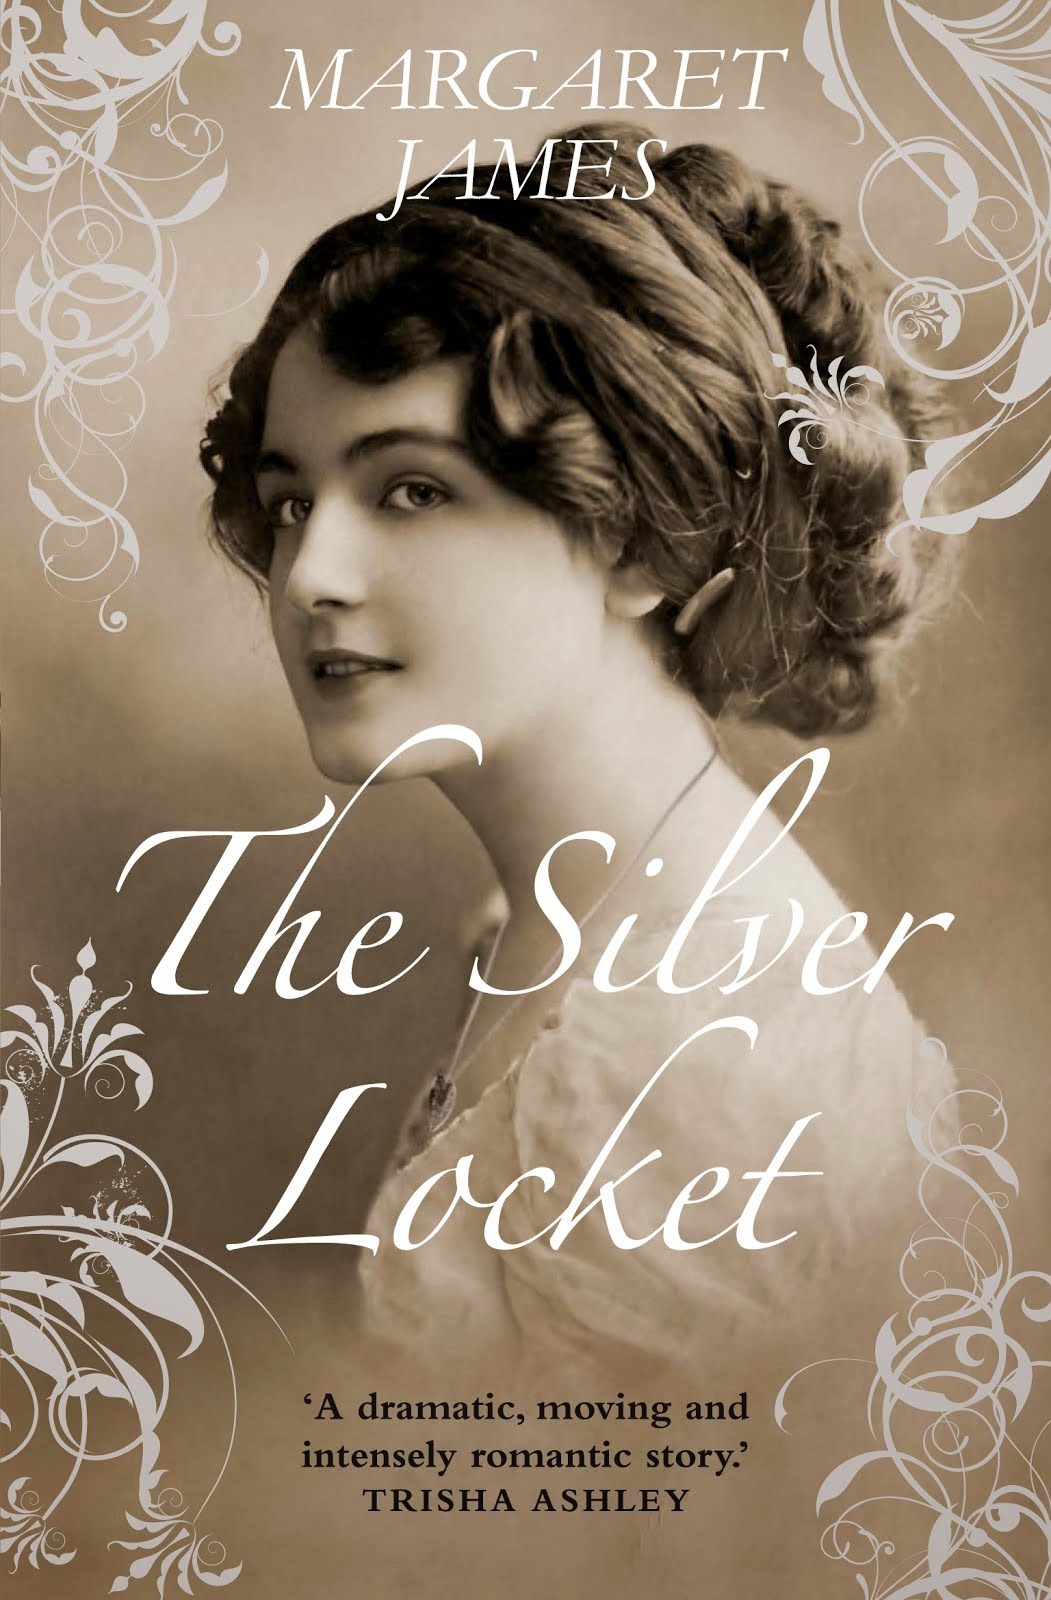 Margaret James The Silver Locket